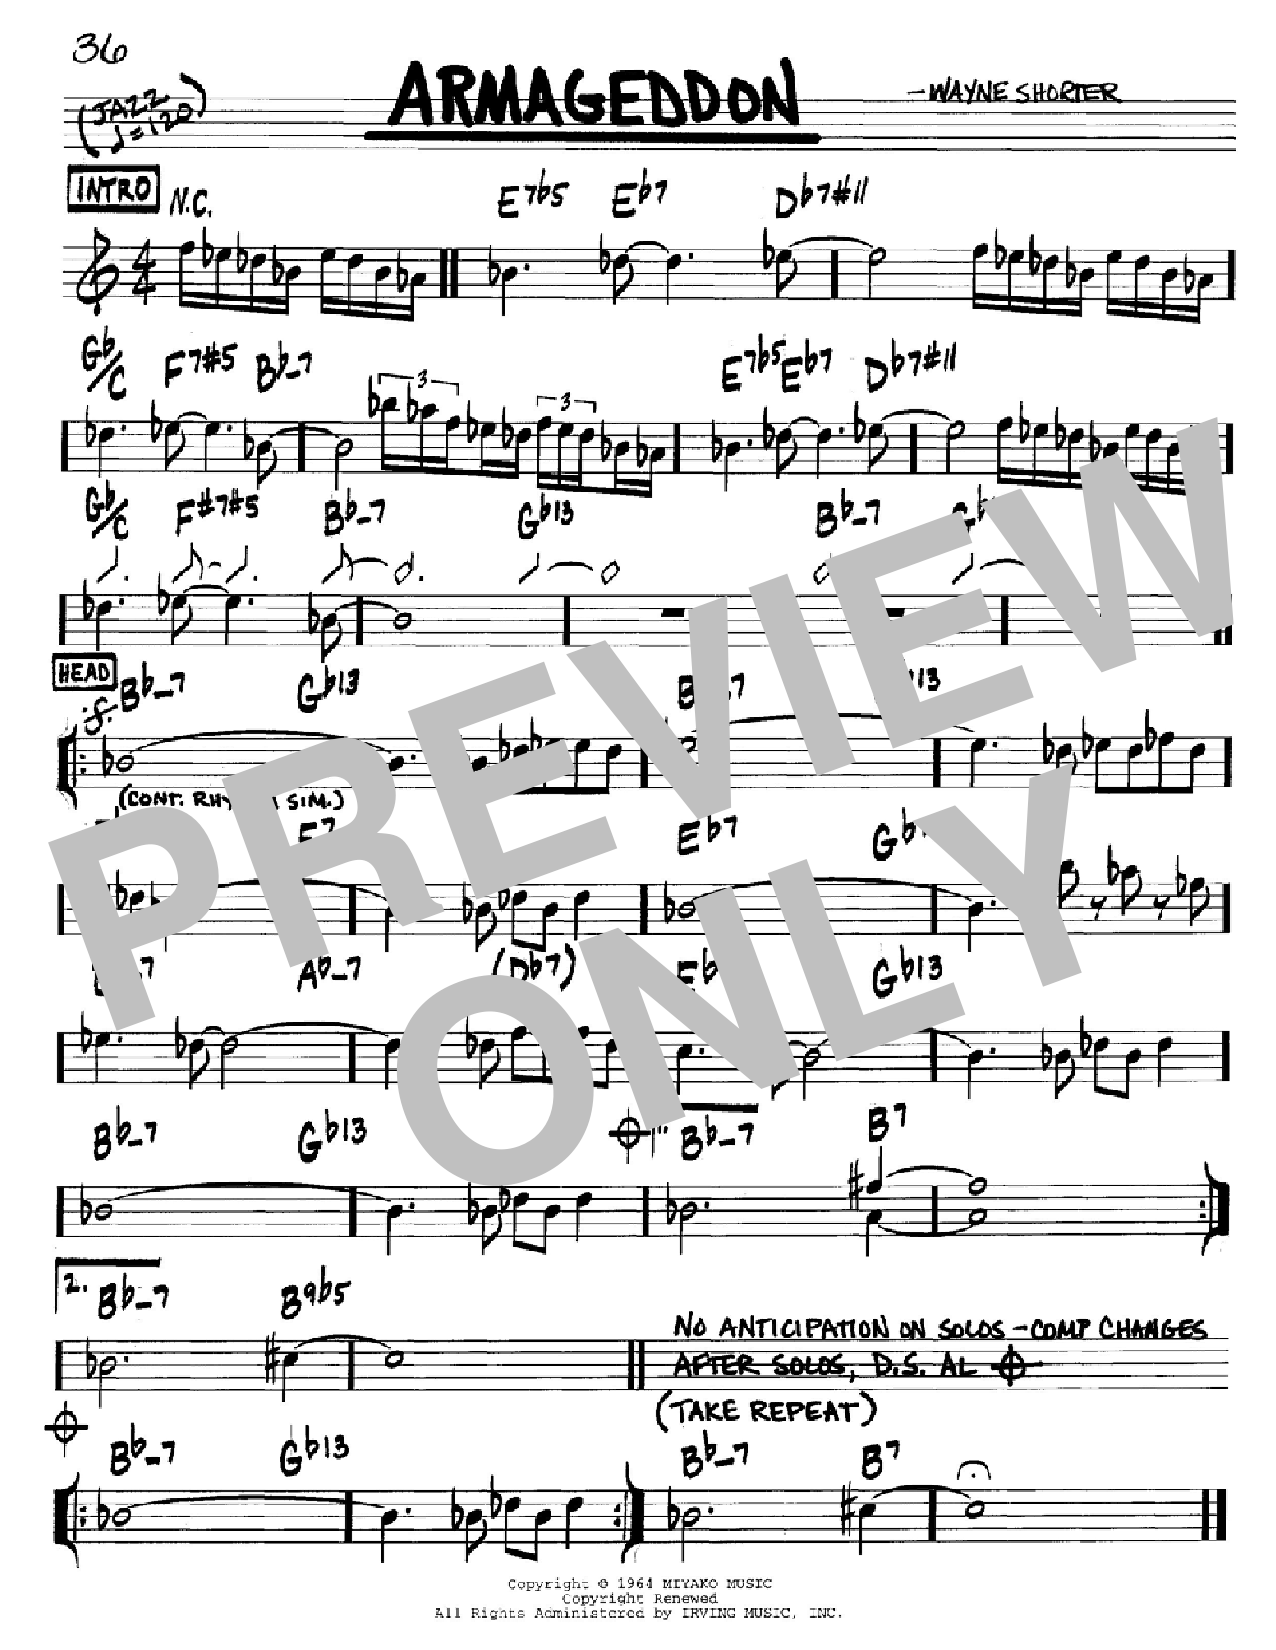 Wayne Shorter Armageddon Sheet Music Notes & Chords for Real Book - Melody & Chords - Bass Clef Instruments - Download or Print PDF